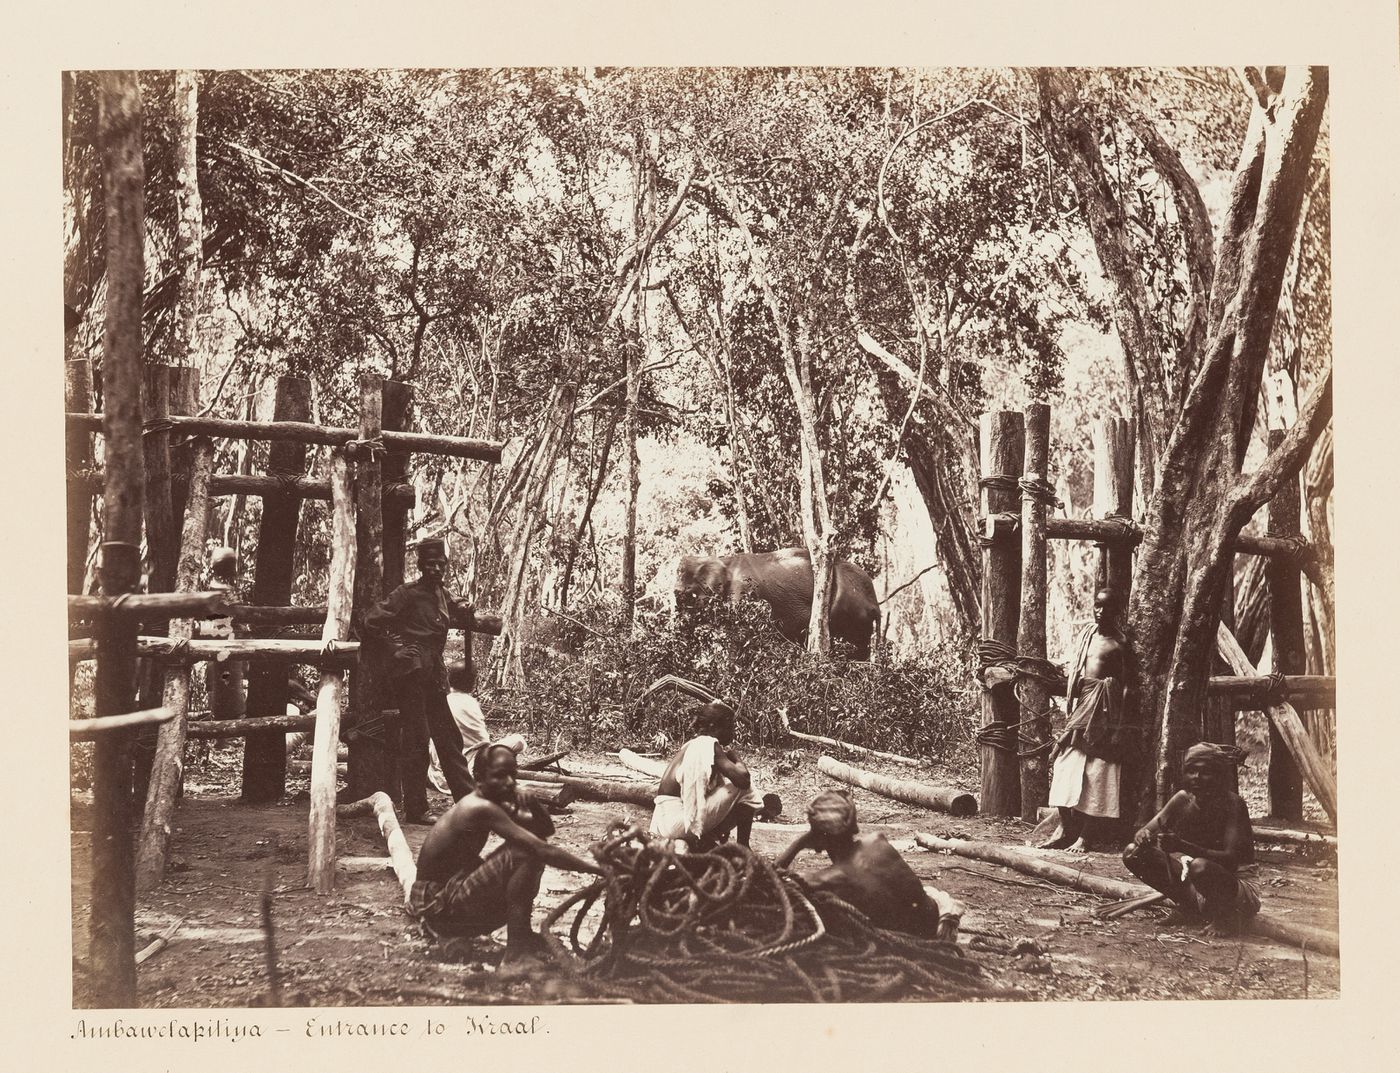 View of an elephand, named "The Duke", tied to a tree, Ambawela, Ceylon (now Sri Lanka)